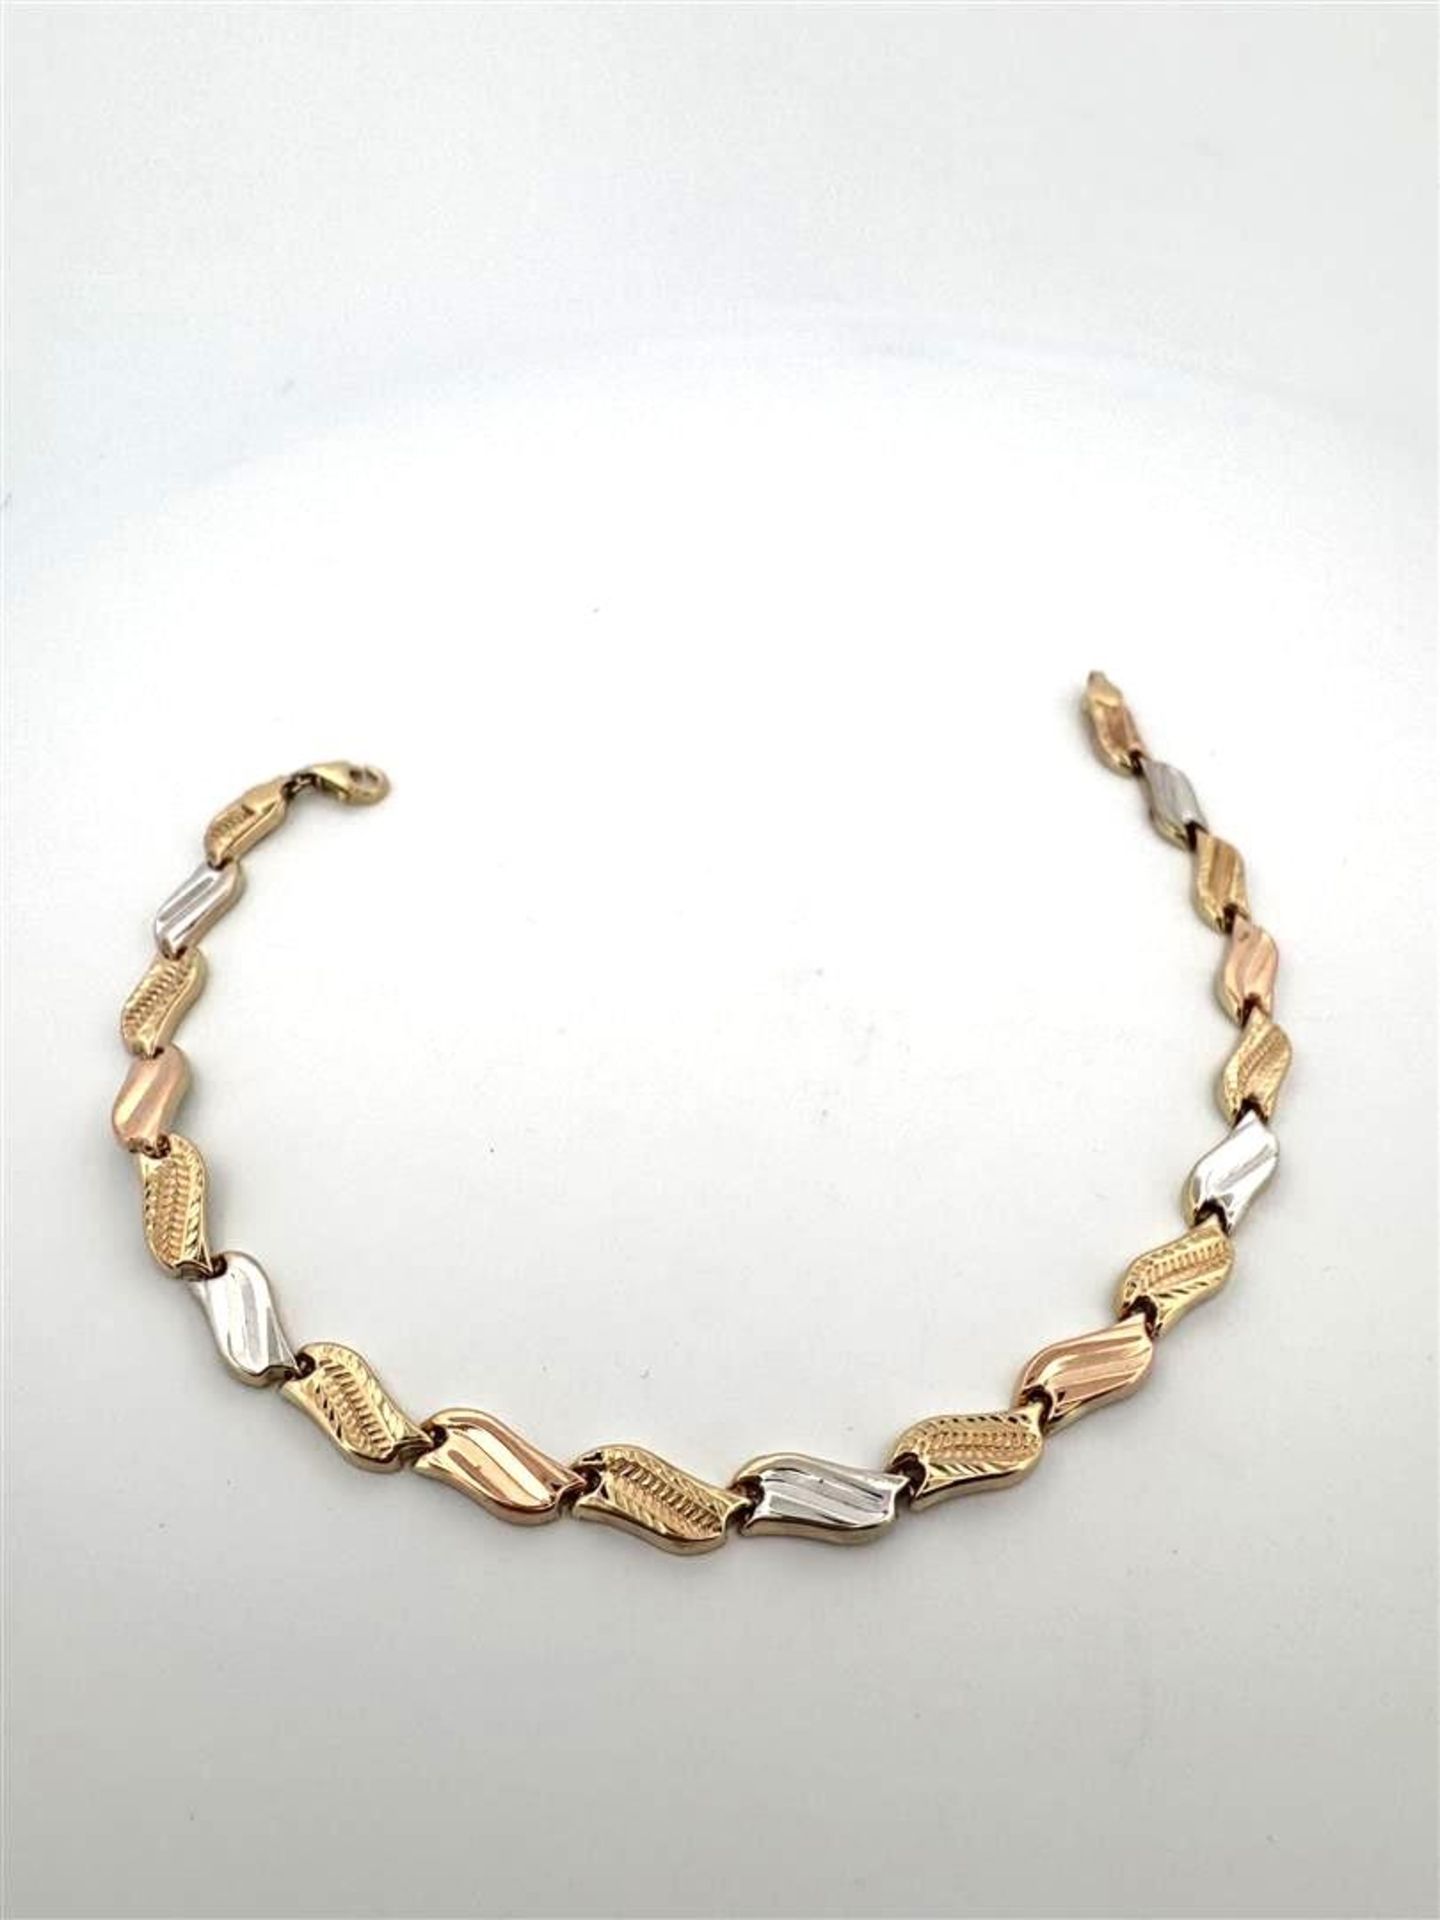 14kt tricolor gold fantasy link bracelet.
The bracelet has a beautiful fanatic link in the shape of 